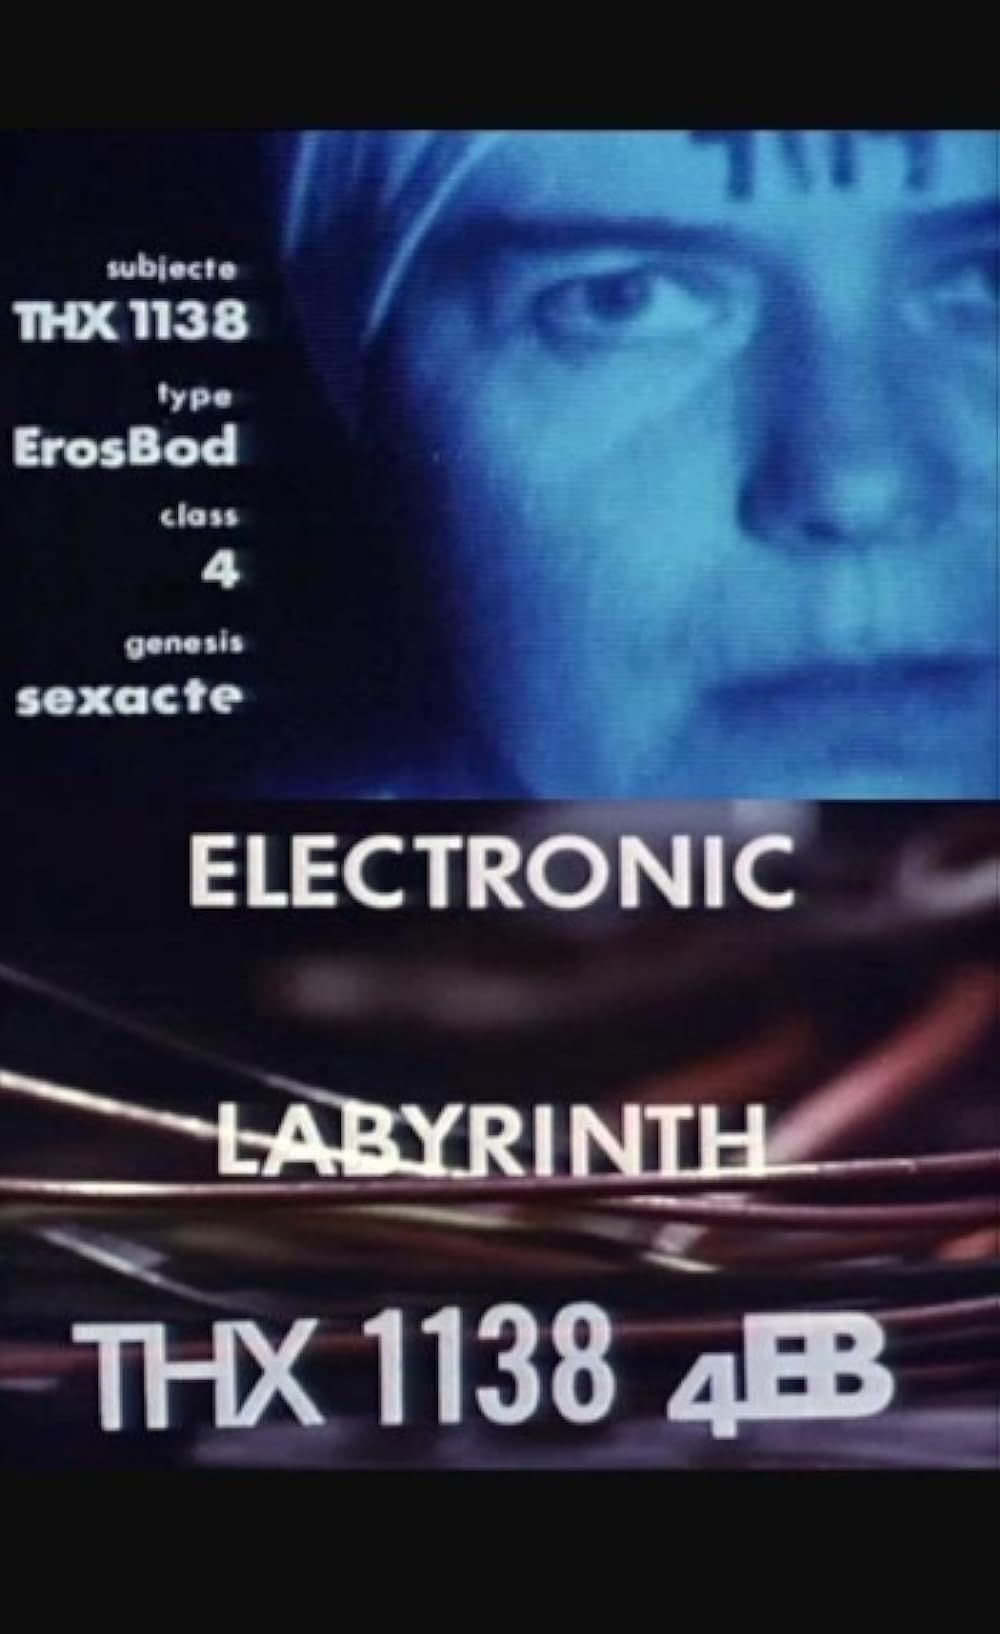 「電子的迷宮／THX-1138:4EB」の画像